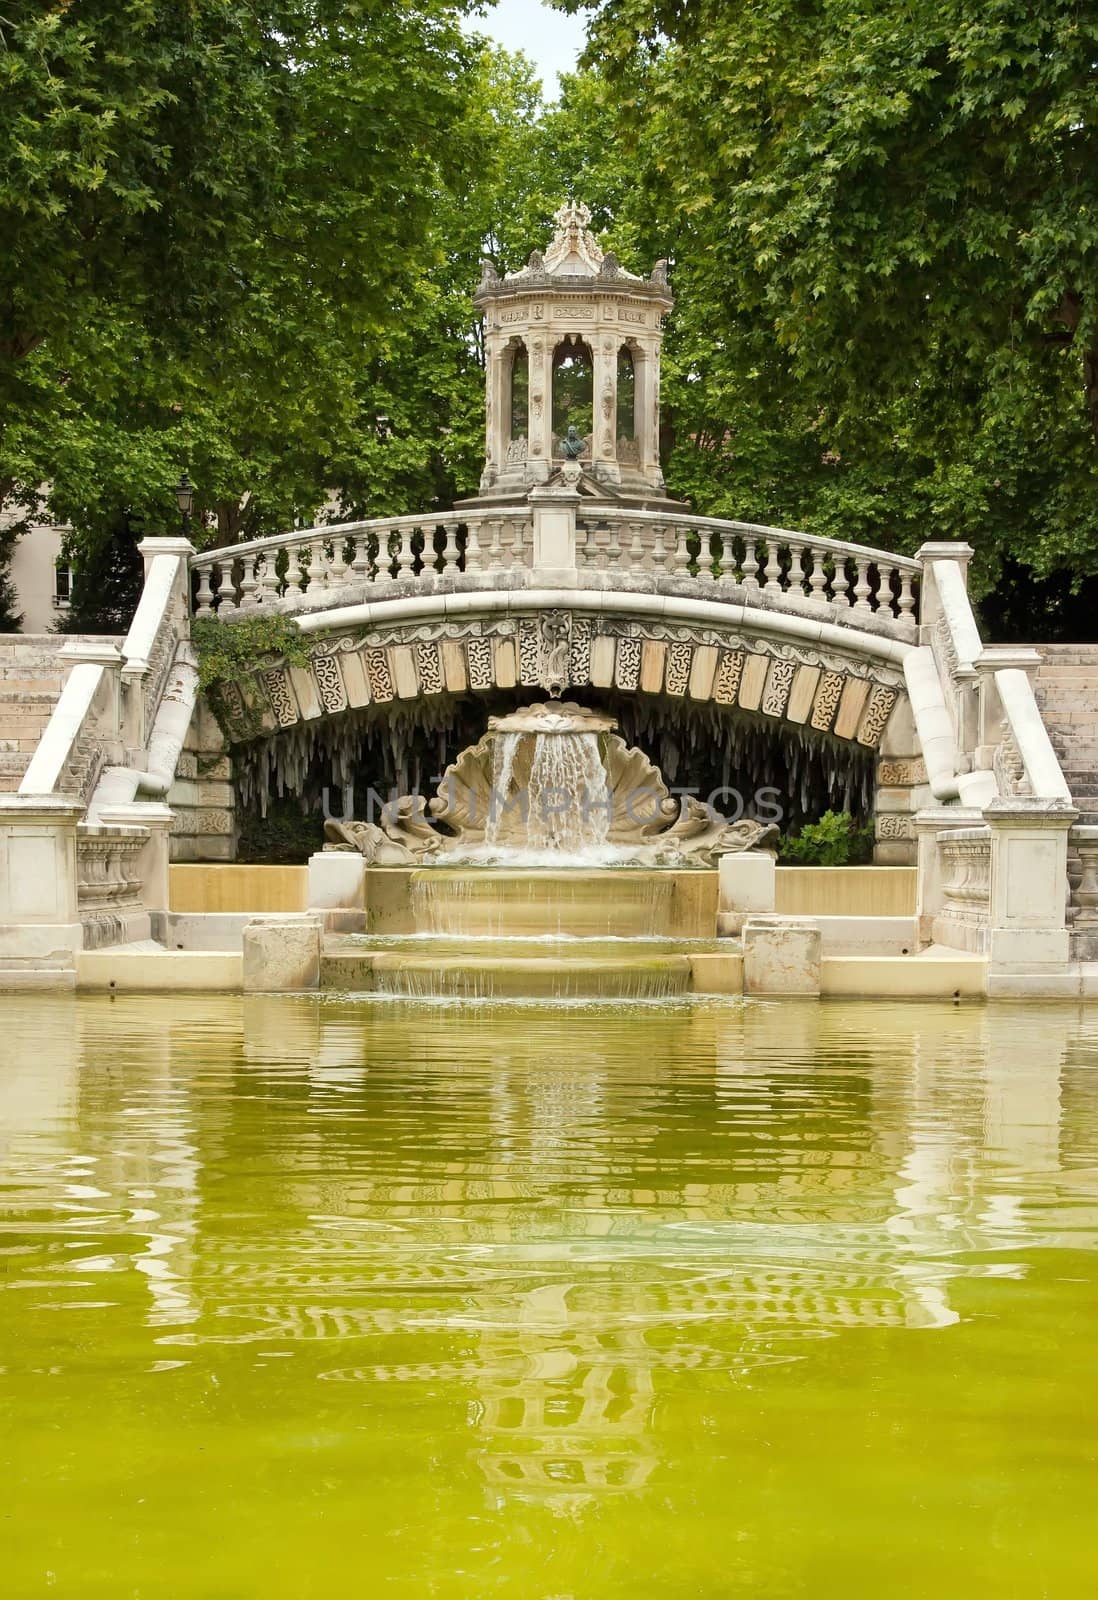 darcy's  fountain, 19 th century in Dijon (Burgundy France)